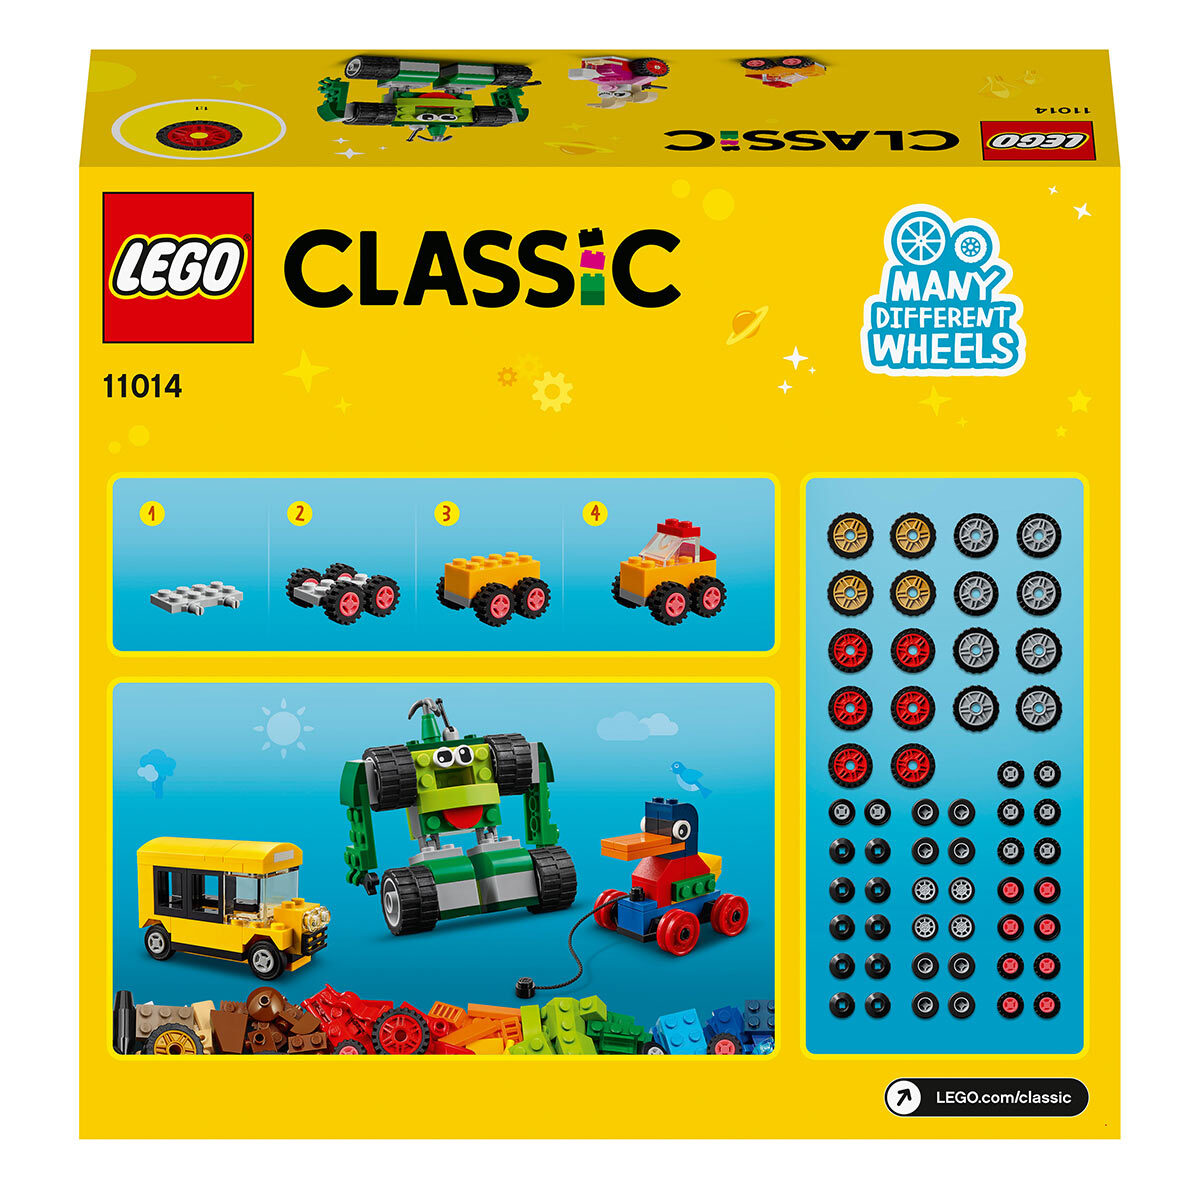 LEGO Classic Bricks And Wheels Building Set - Model 11014 (4+ Years)